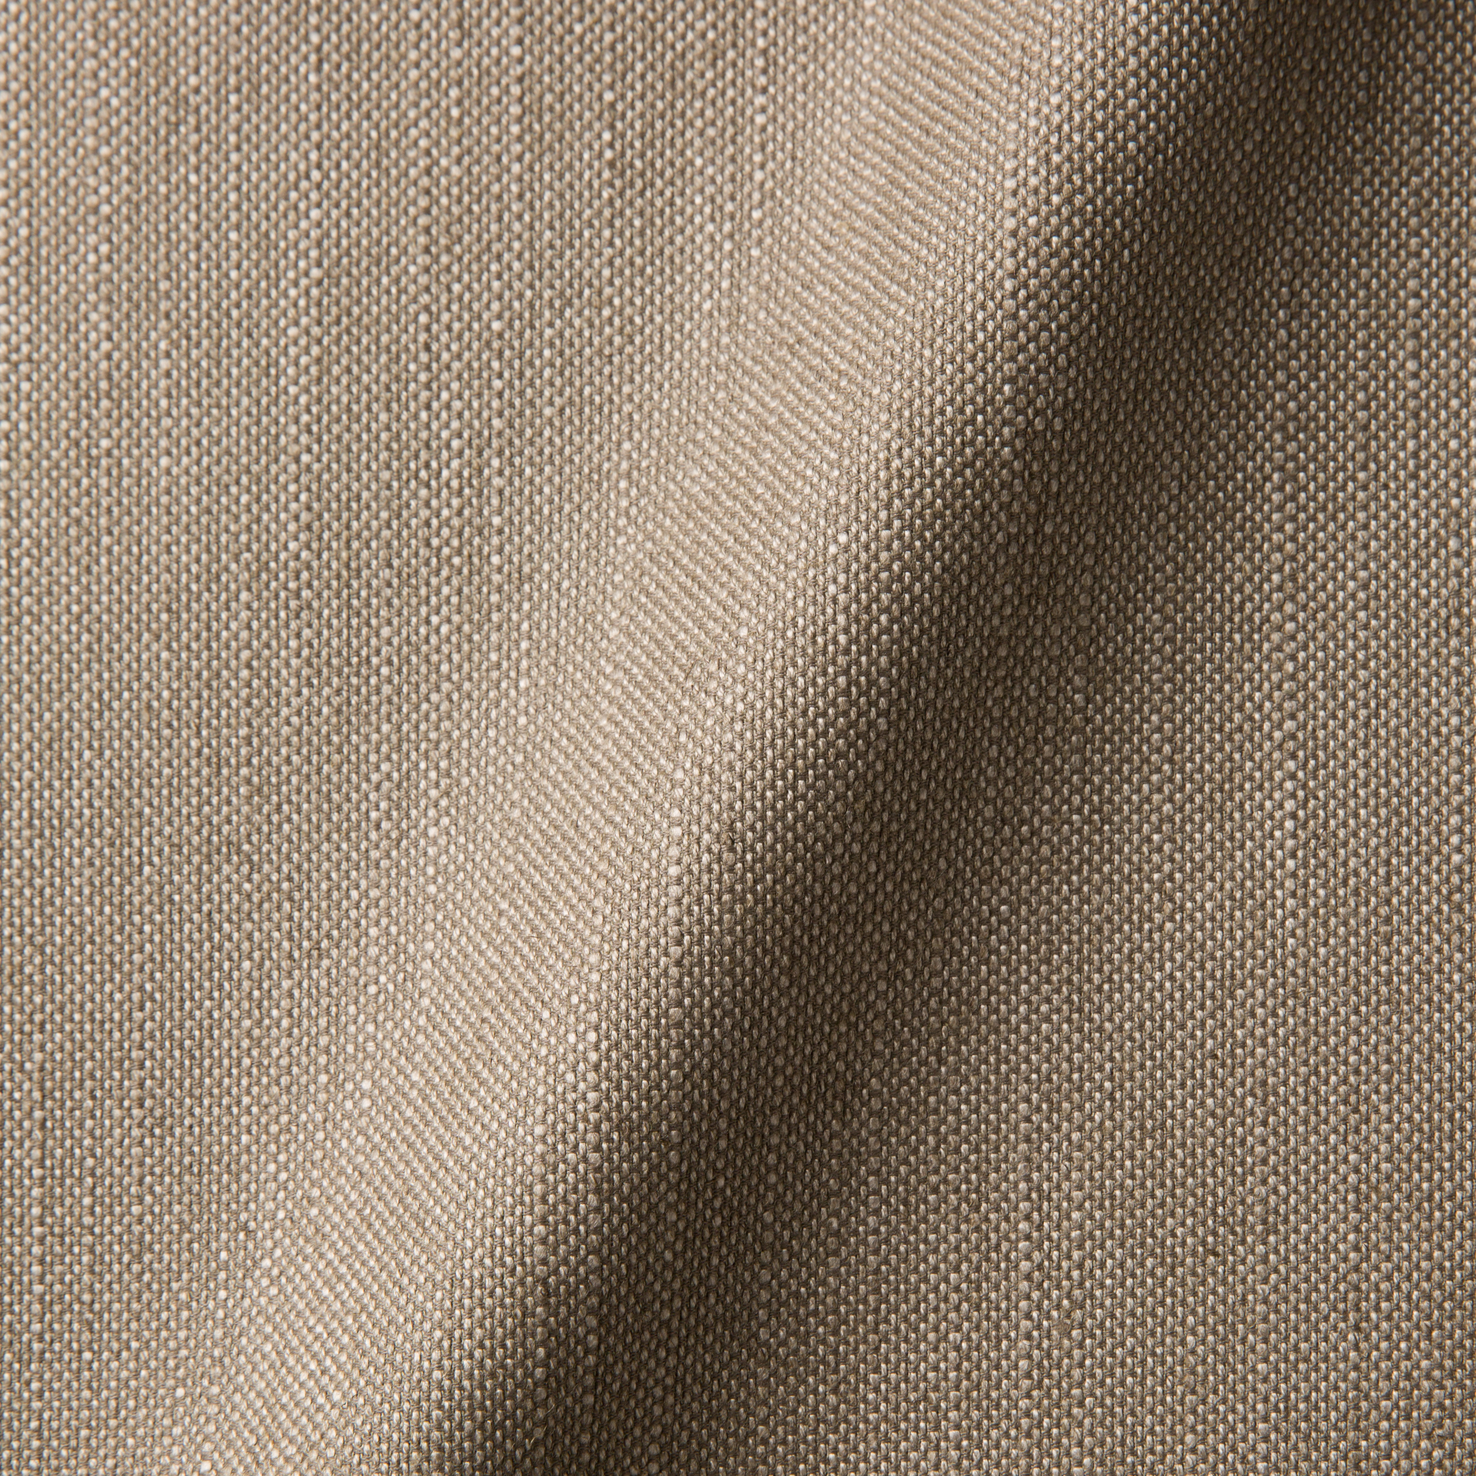 Fabric sample Macchedil Sottile Light Brown